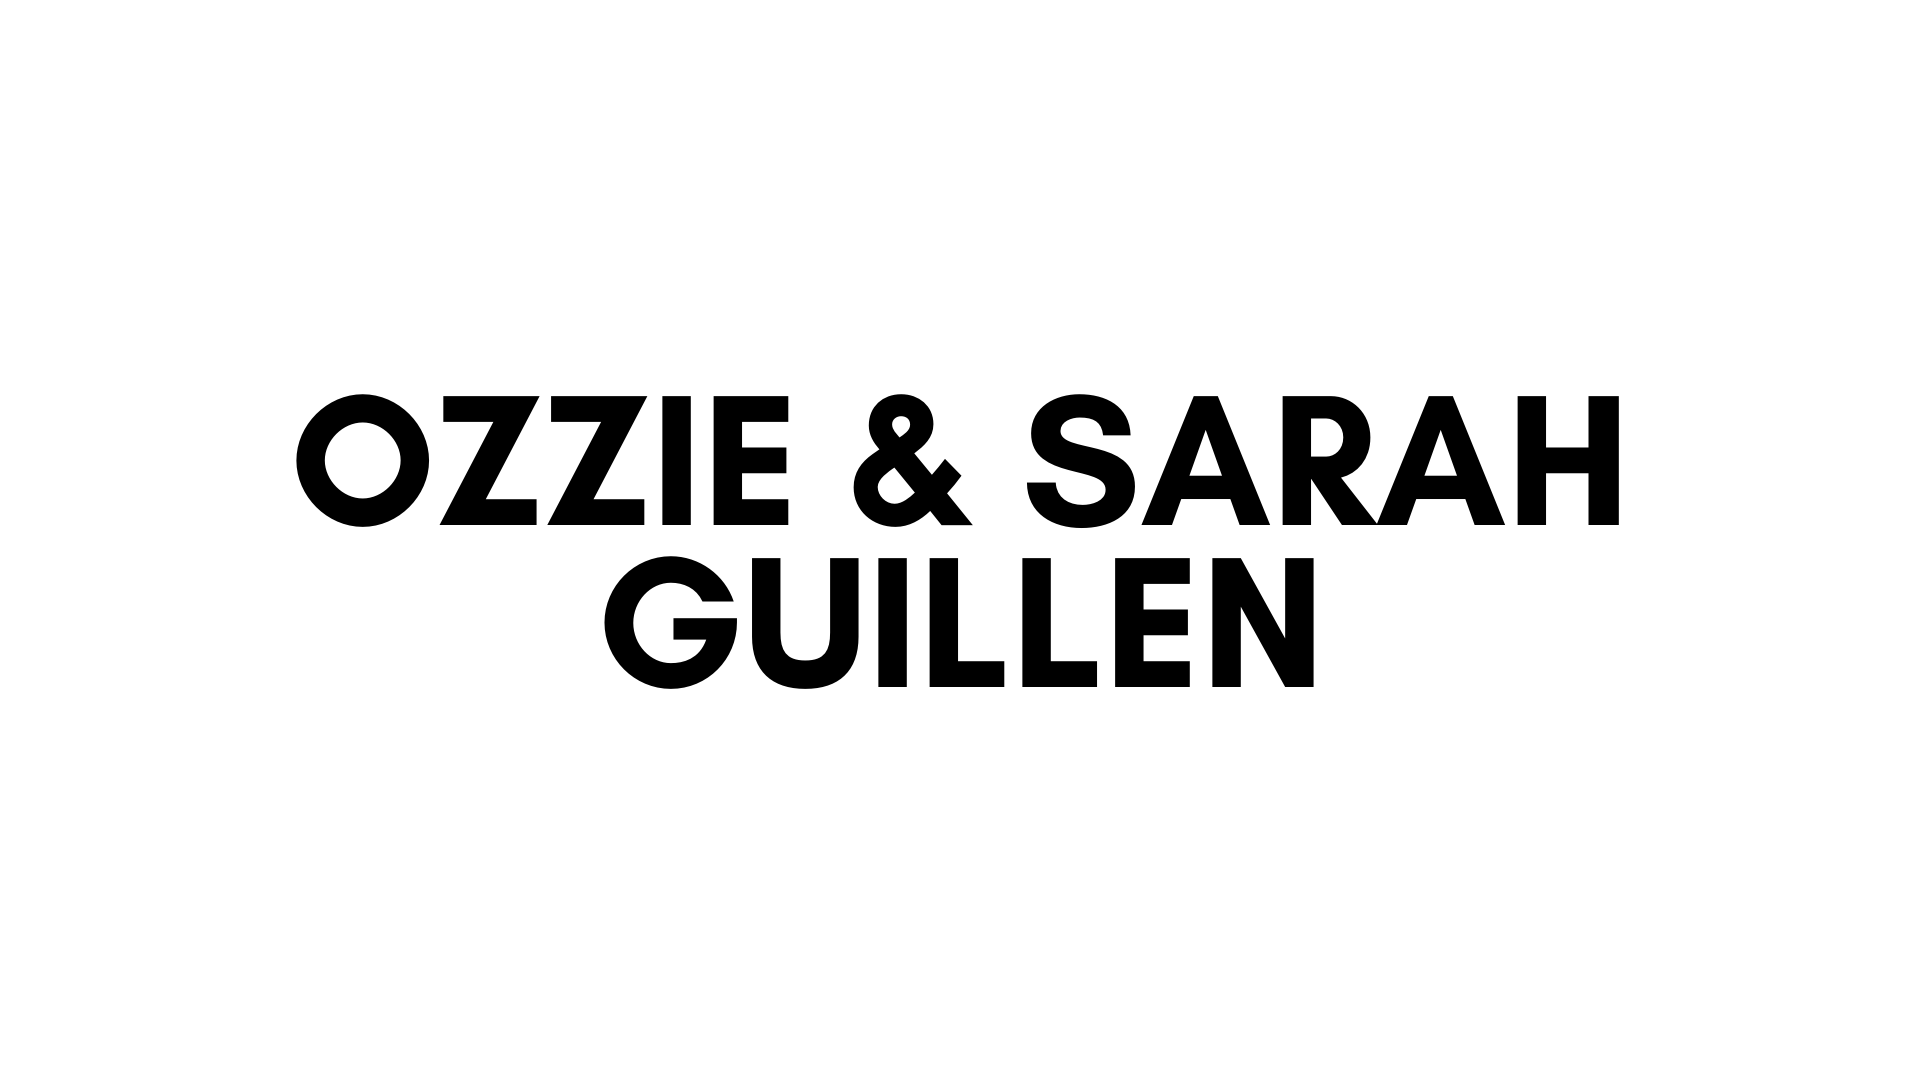 OZZIE AND SARAH GUILLEN